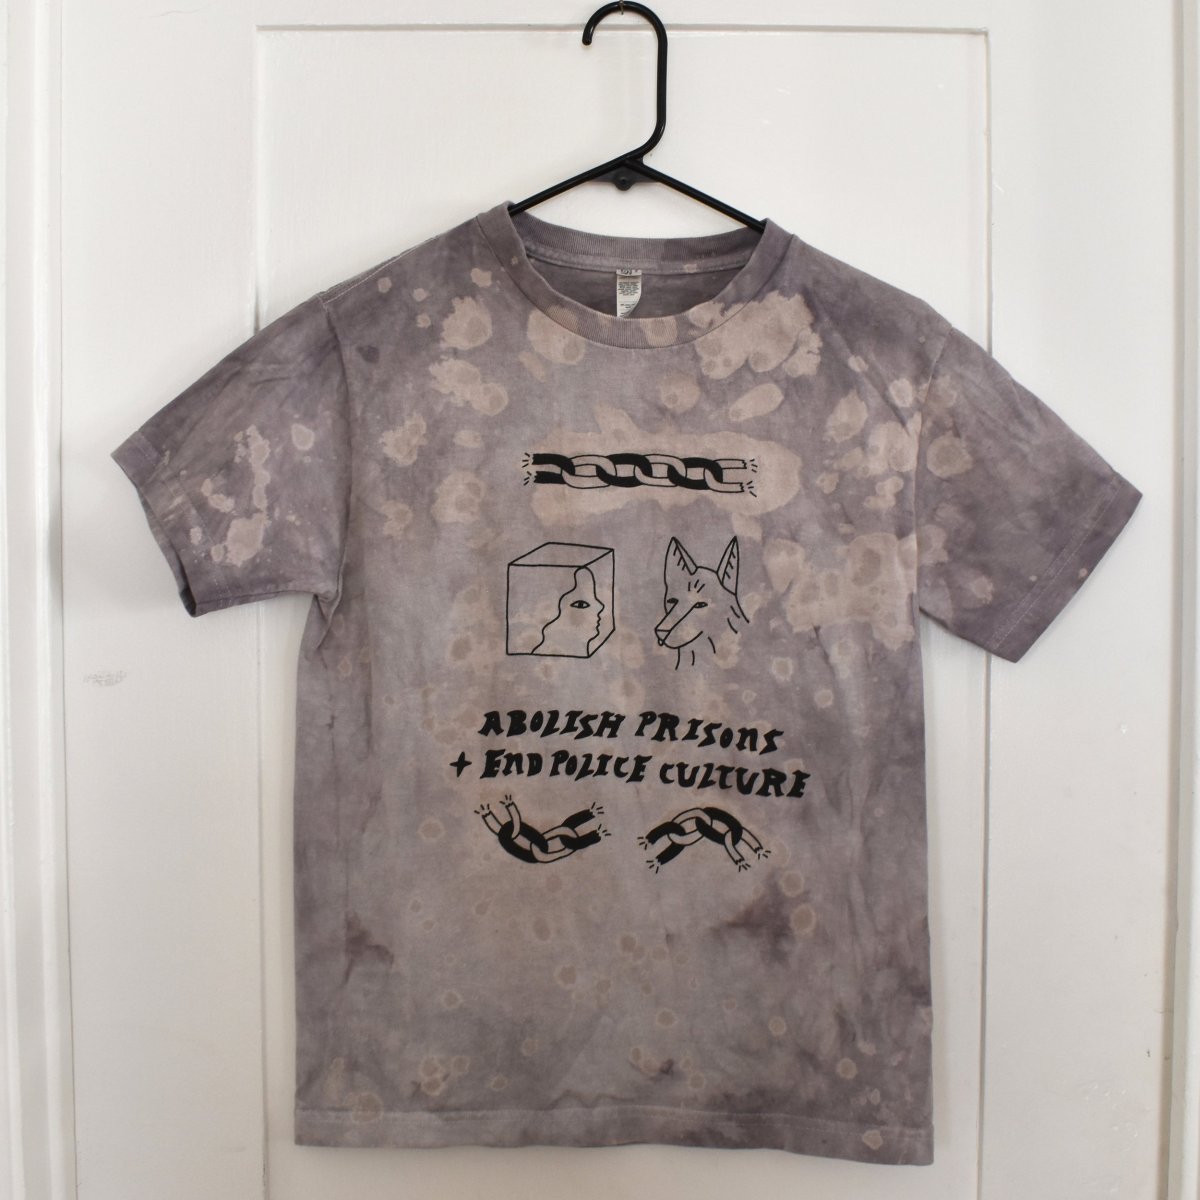 Abolish Prisons Shirt – COOL HUNTING®